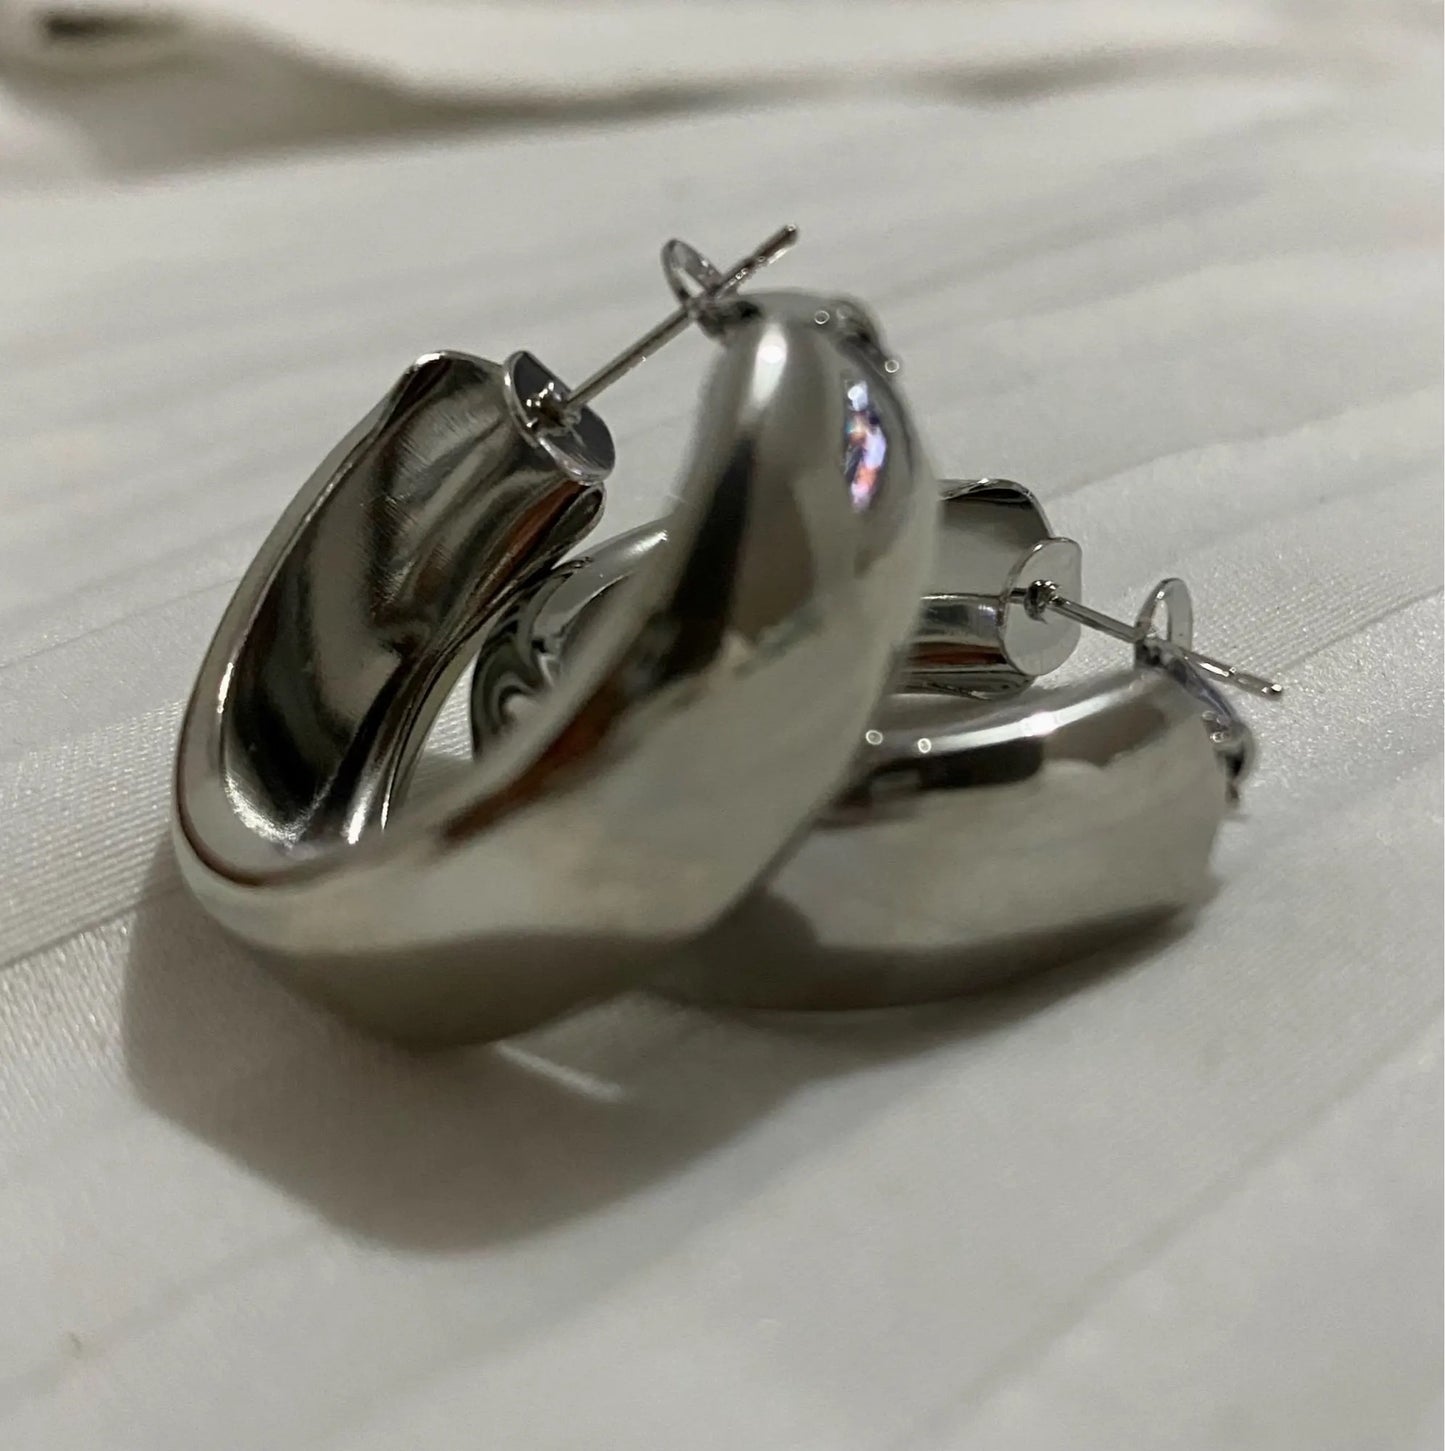 Silver Hoops Earrings